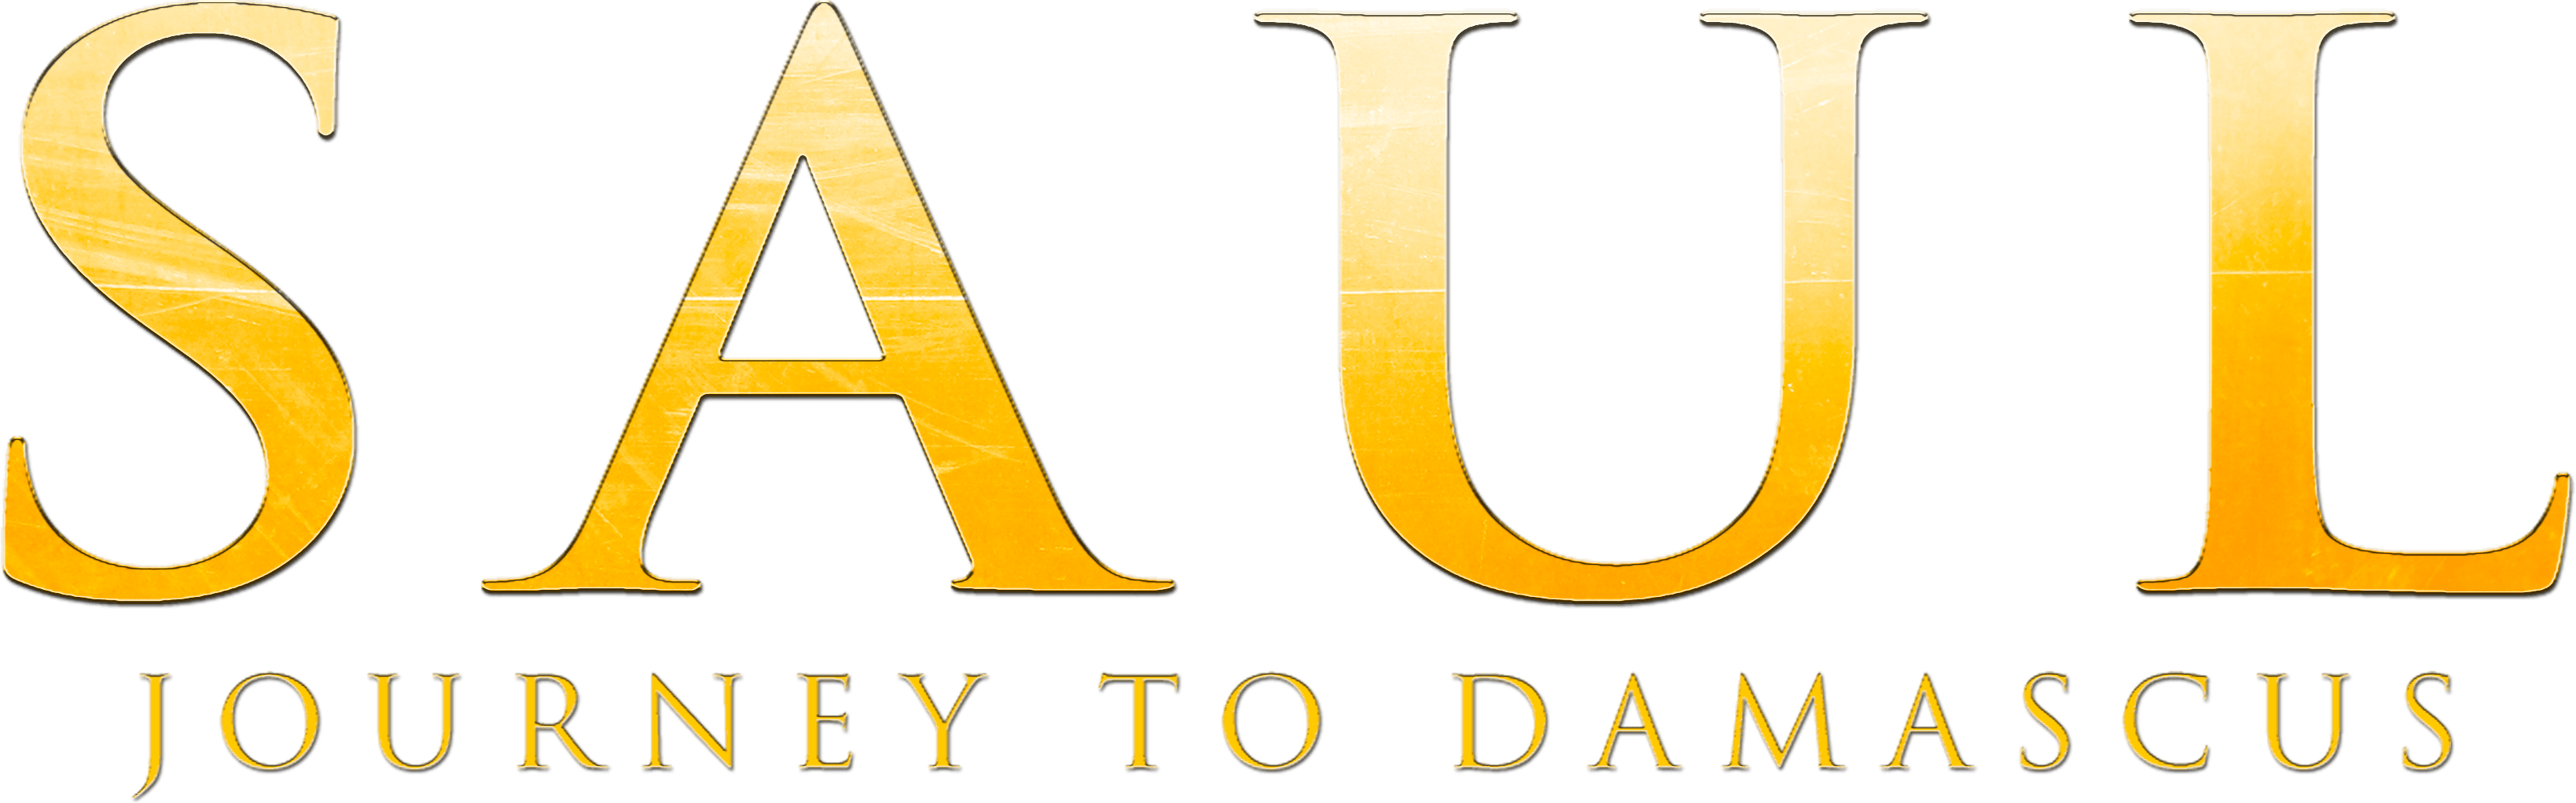 Saul: The Journey to Damascus logo